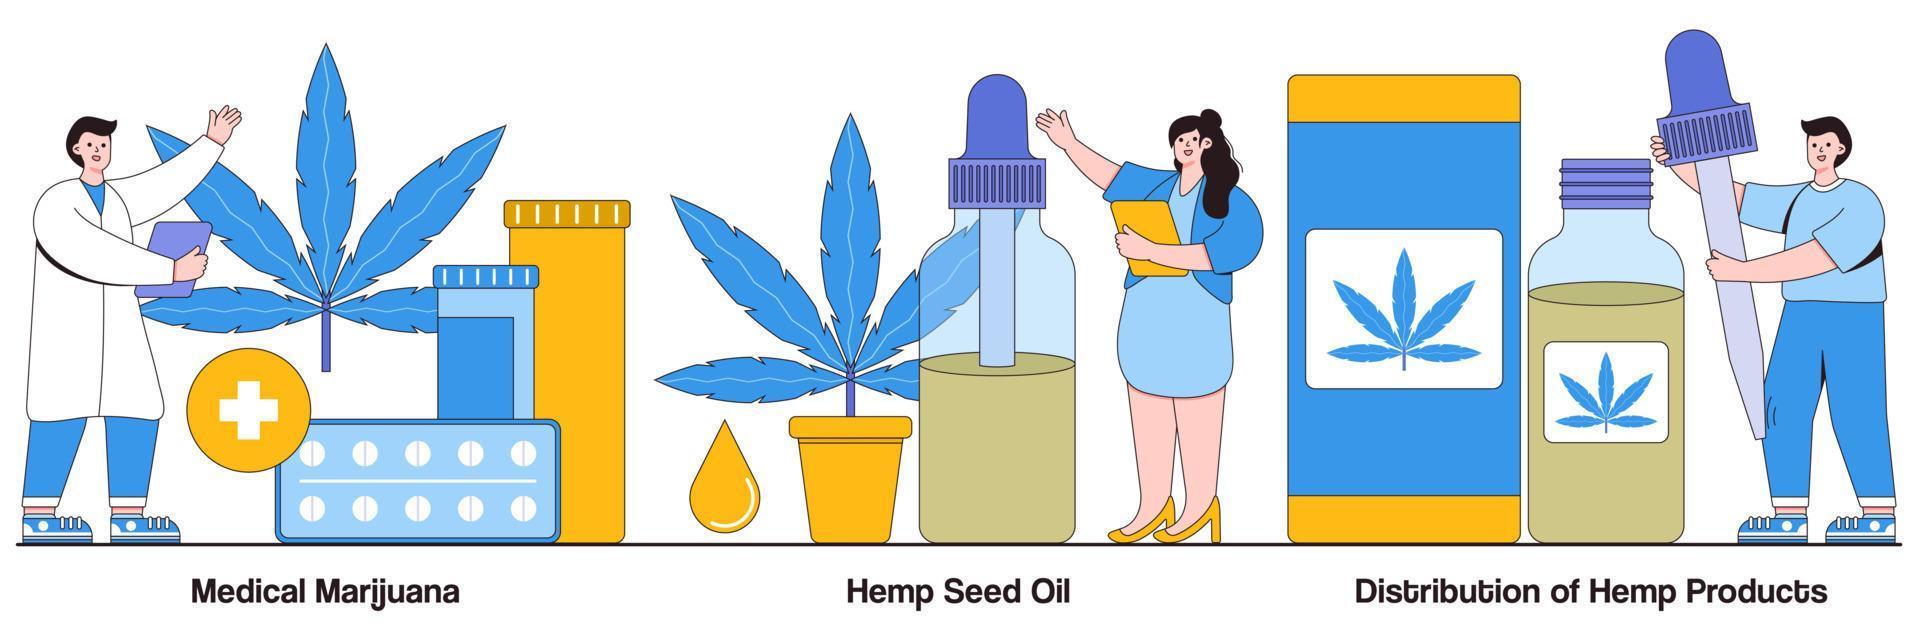 Medical Marijuana, Hemp Seed Oil, and Distribution of Hemp Products Illustrated Pack vector